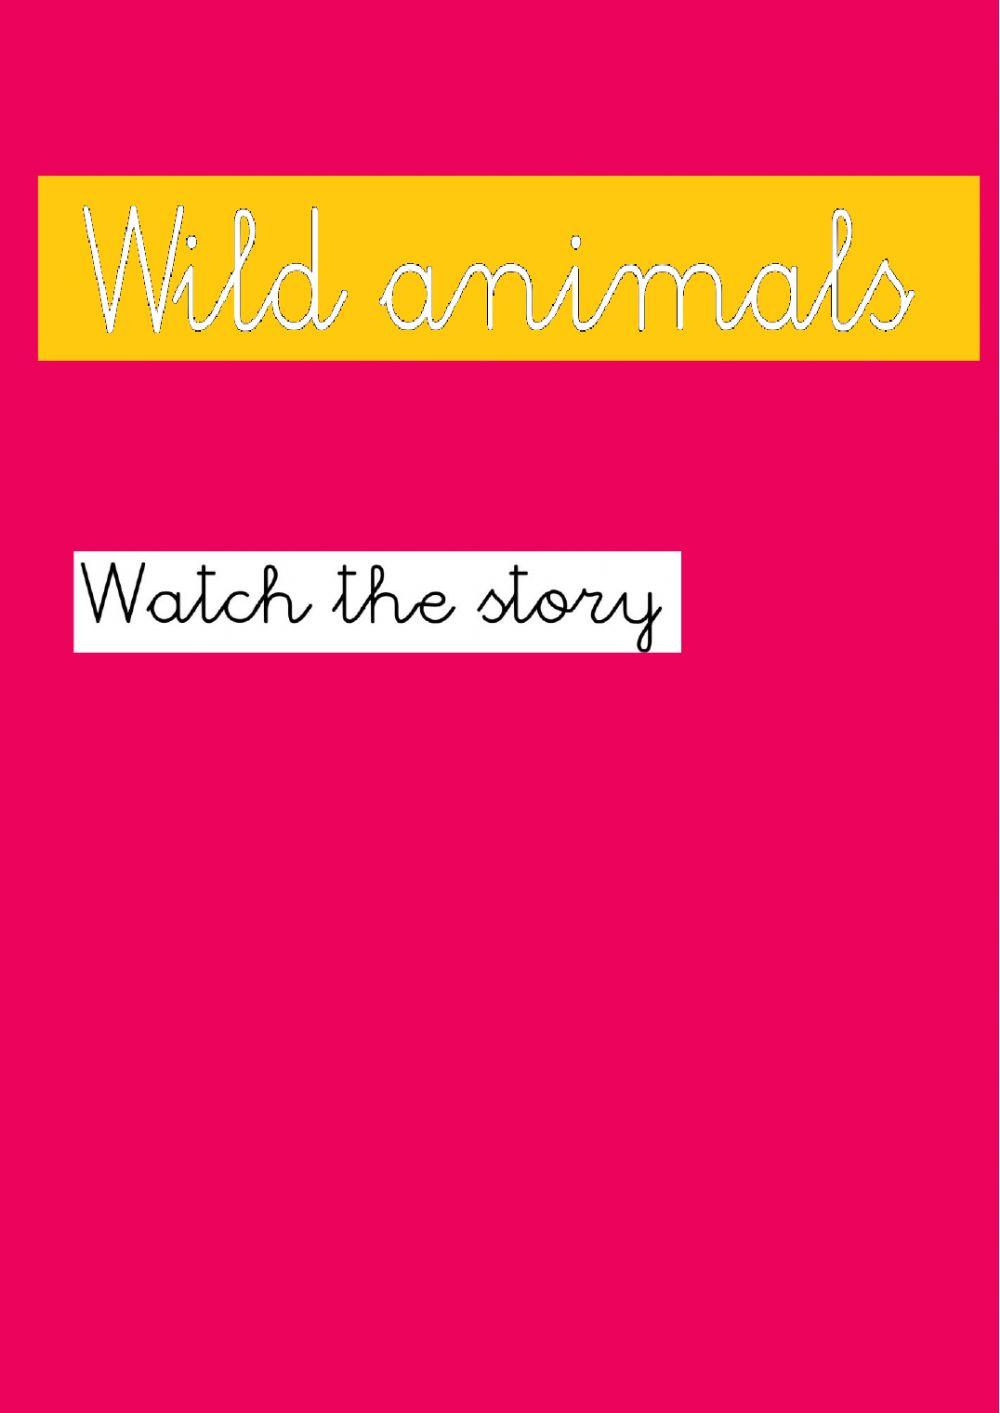 Wild animals story